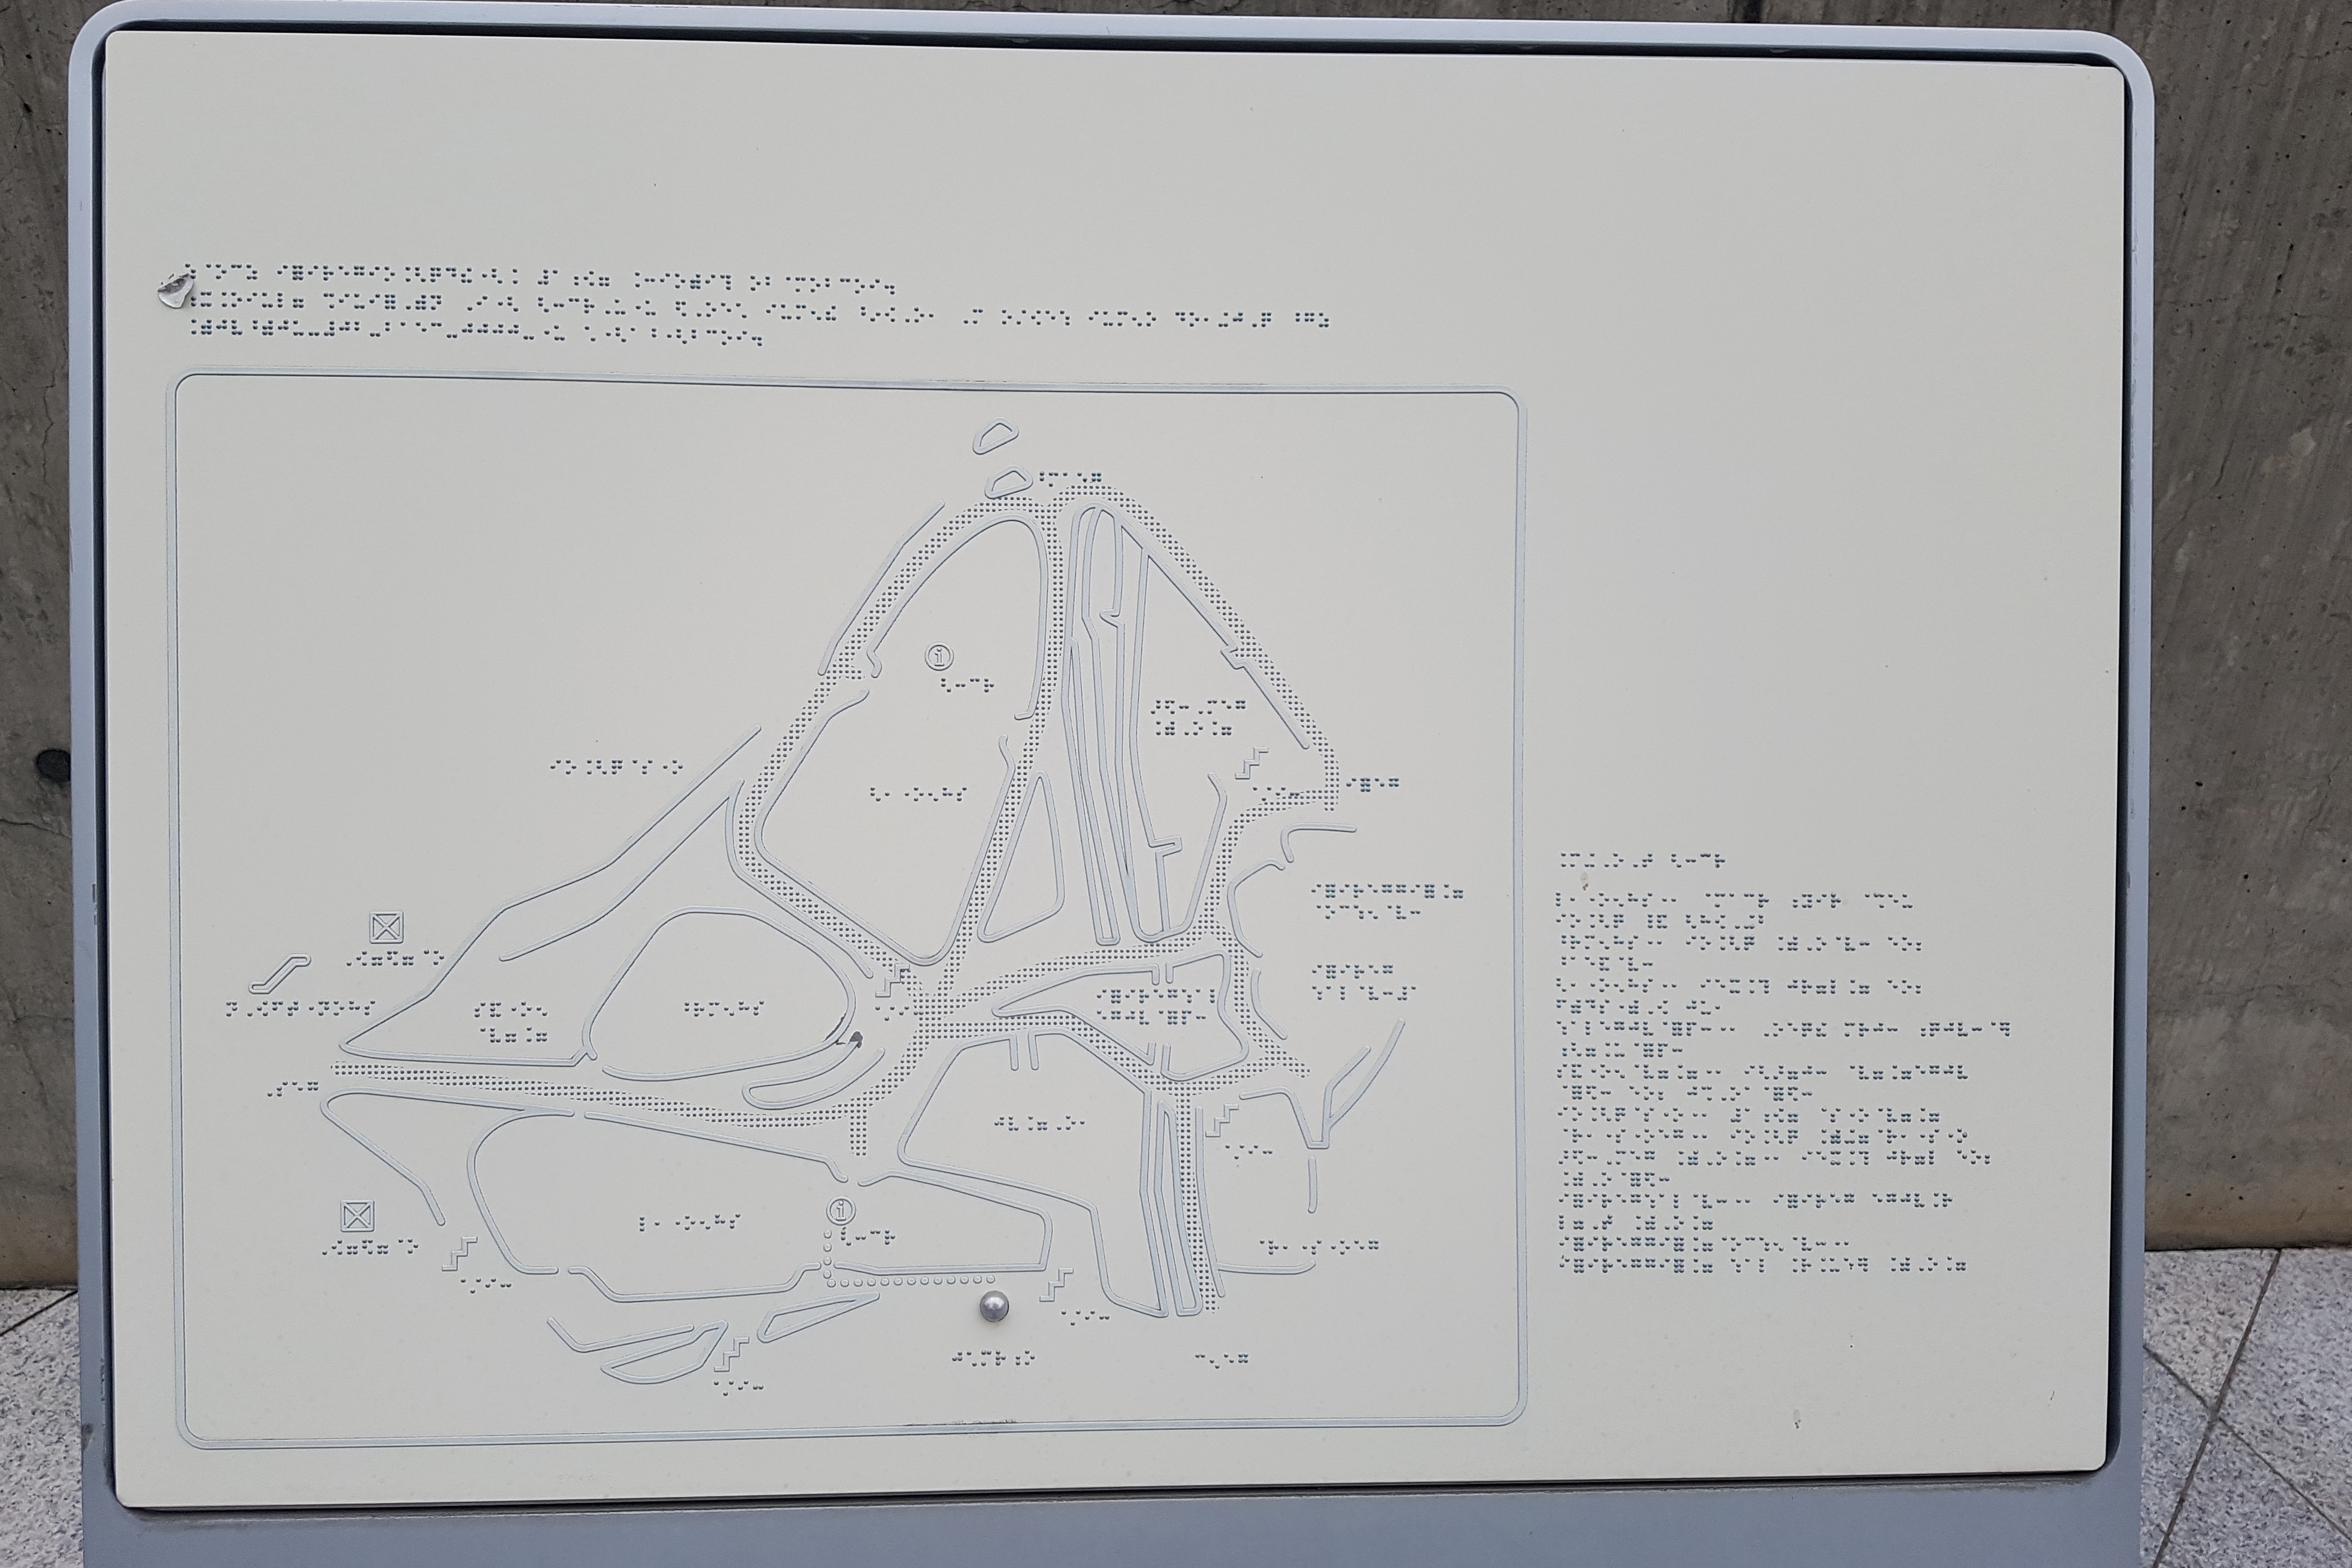 Guide map and information desk0 : Korean braille description board in Dongdaemun Design Plaza 1
